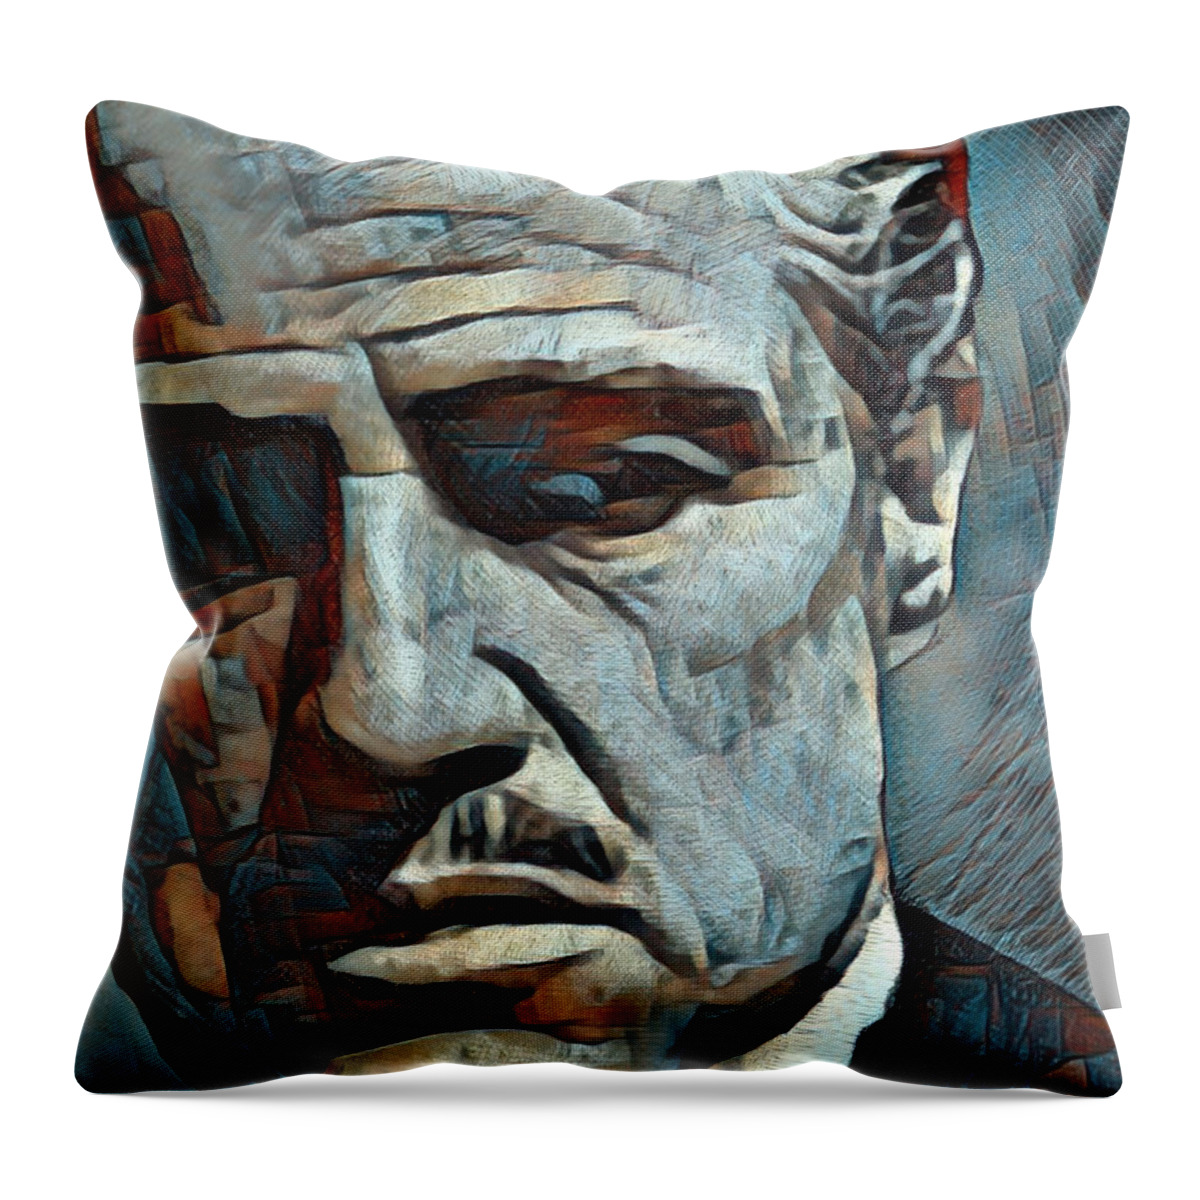 Marlon Brando Throw Pillow featuring the painting Godfather Marlon Brando 2 by Tony Rubino